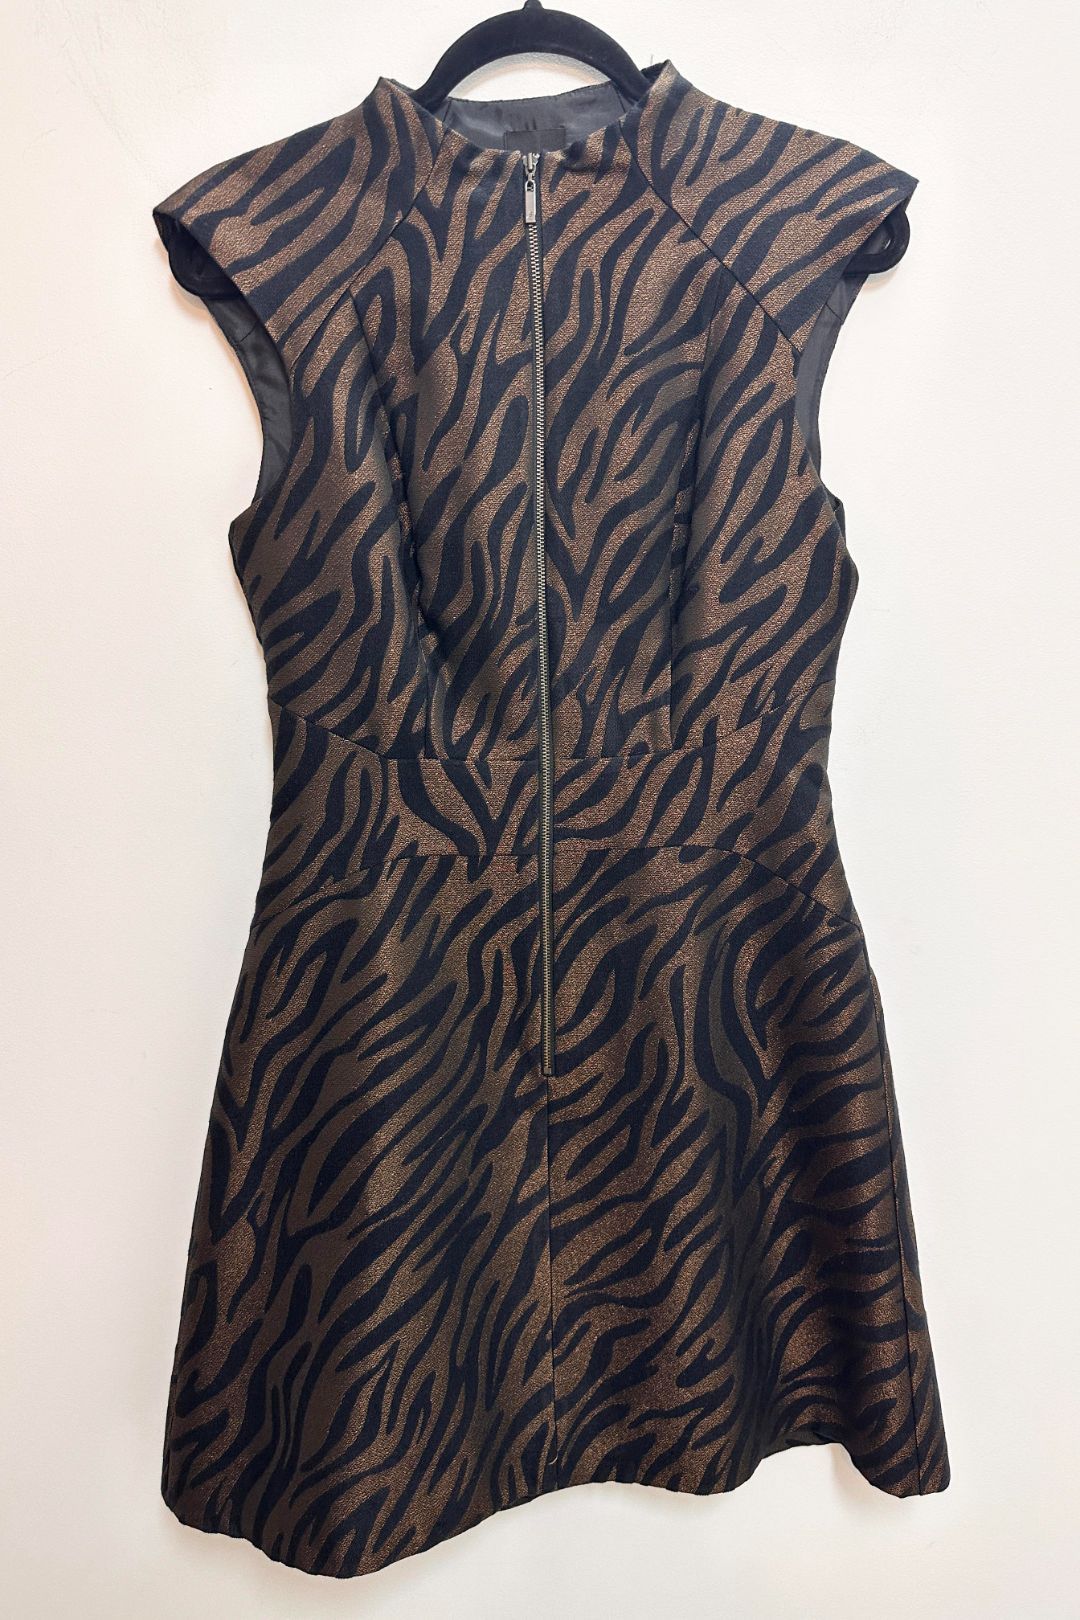 Cue Bronze Zebra Jacquard Dress